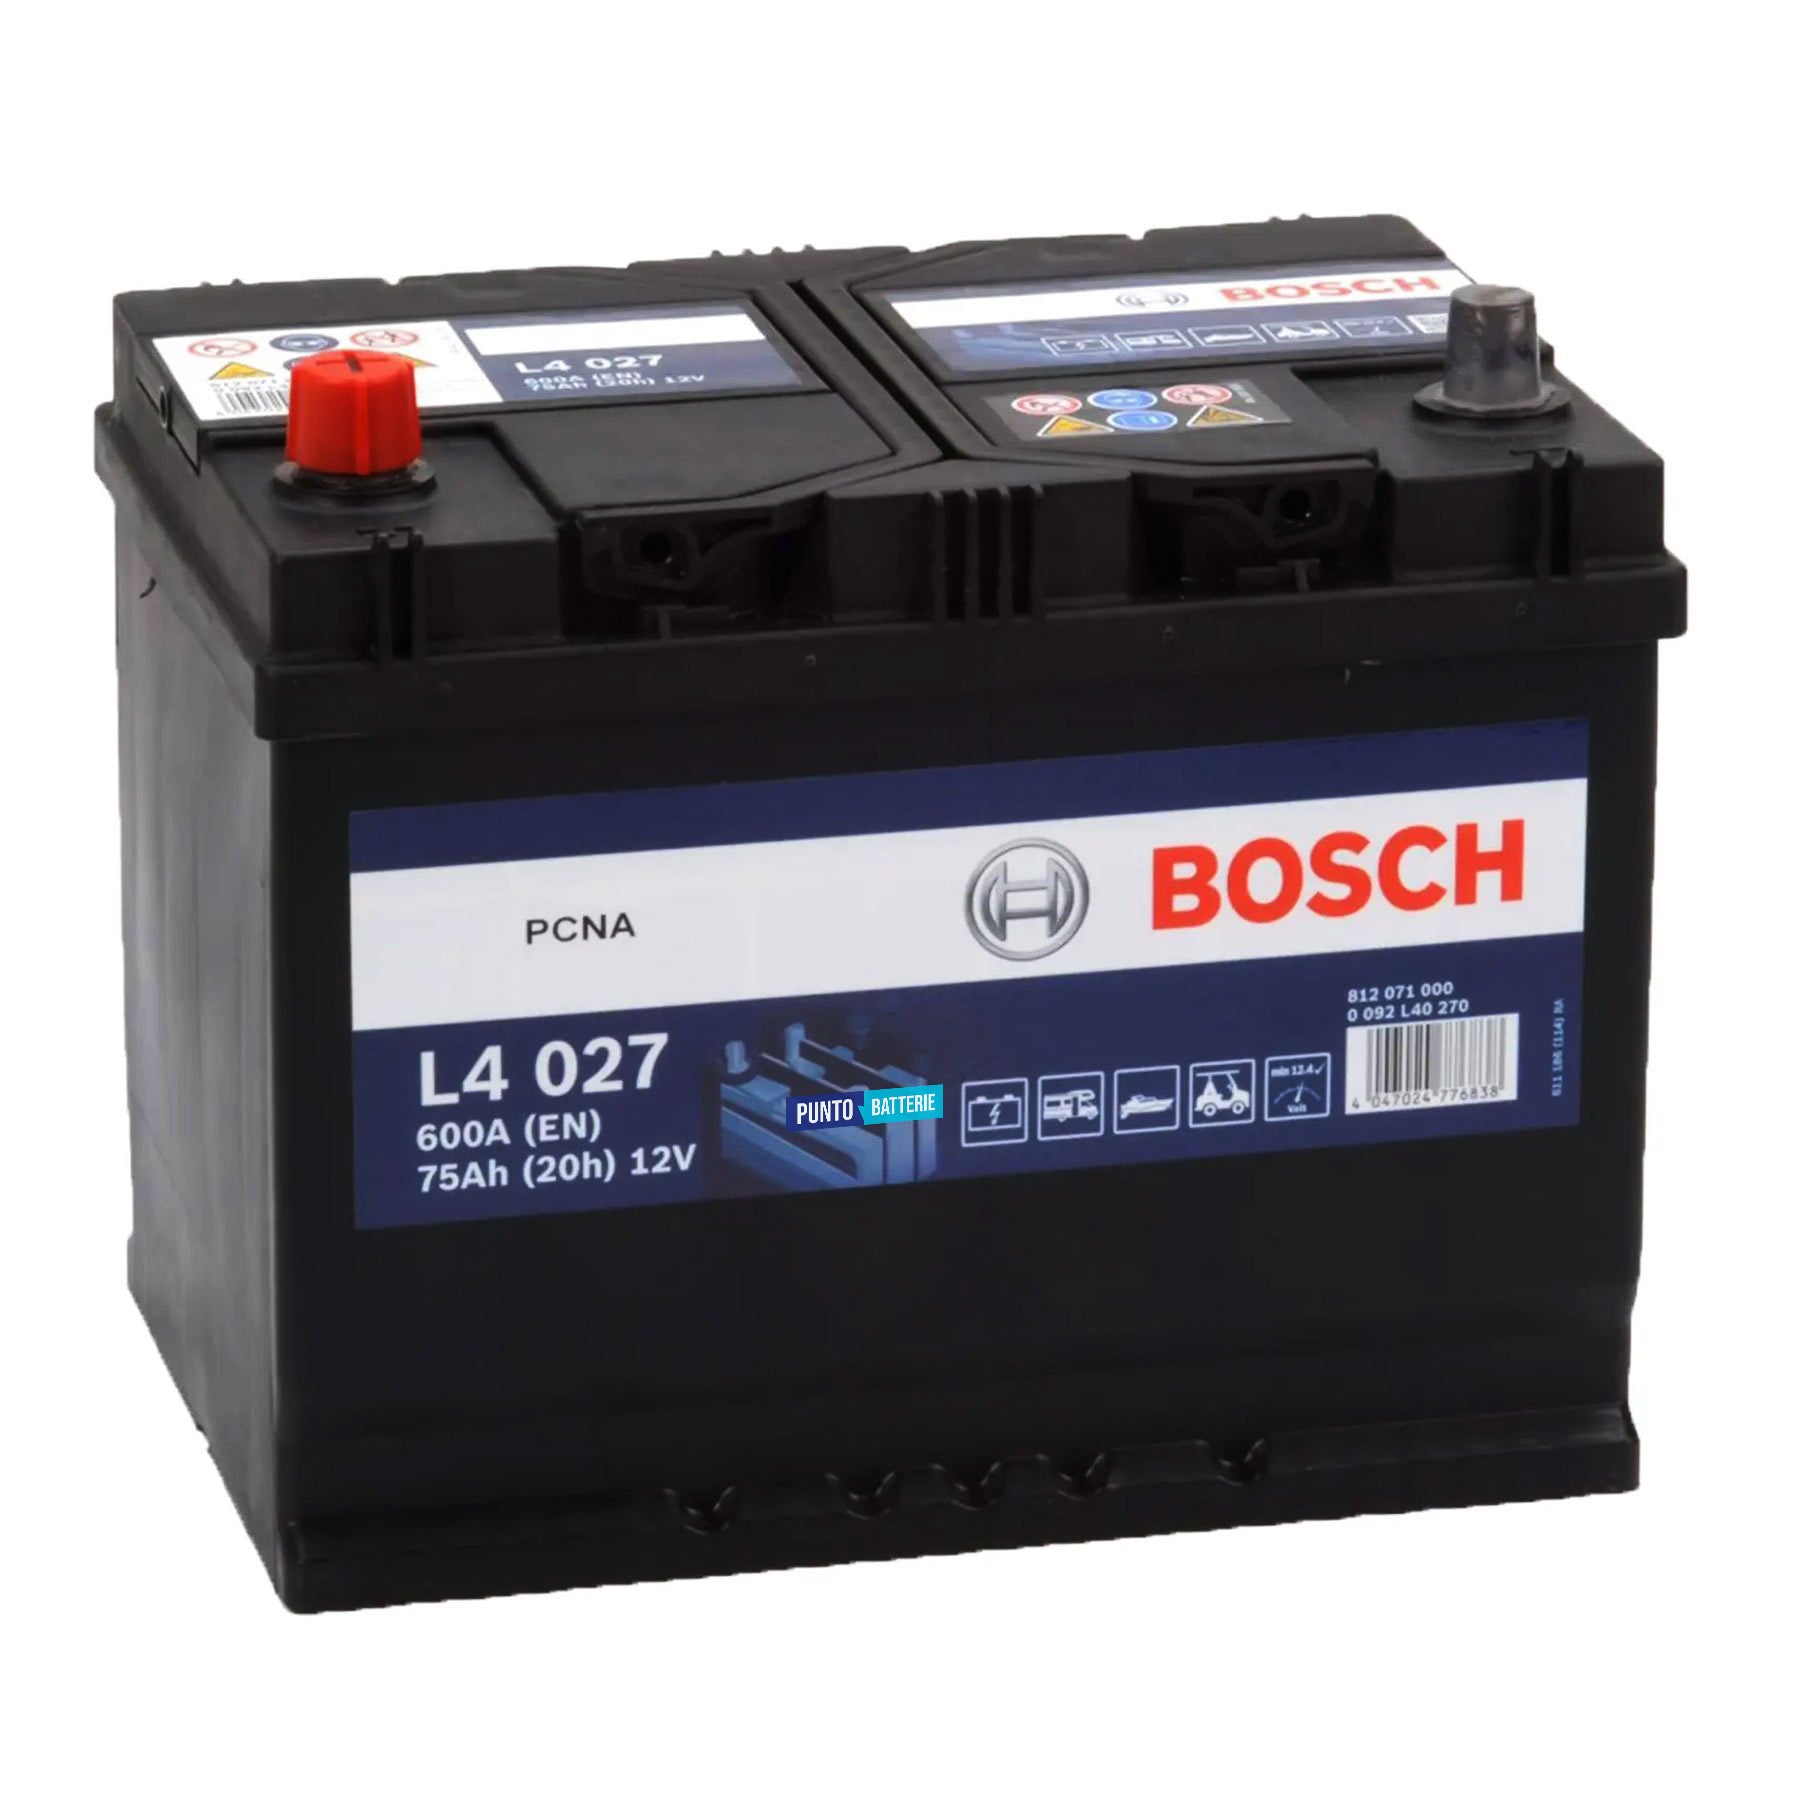 Batteria originale Bosch L4 L4 027, dimensioni 272 x 175 x 225, 12 volt, 75 amperora. Batteria per servizi di camper, barca e applicazioni a scarica lenta.